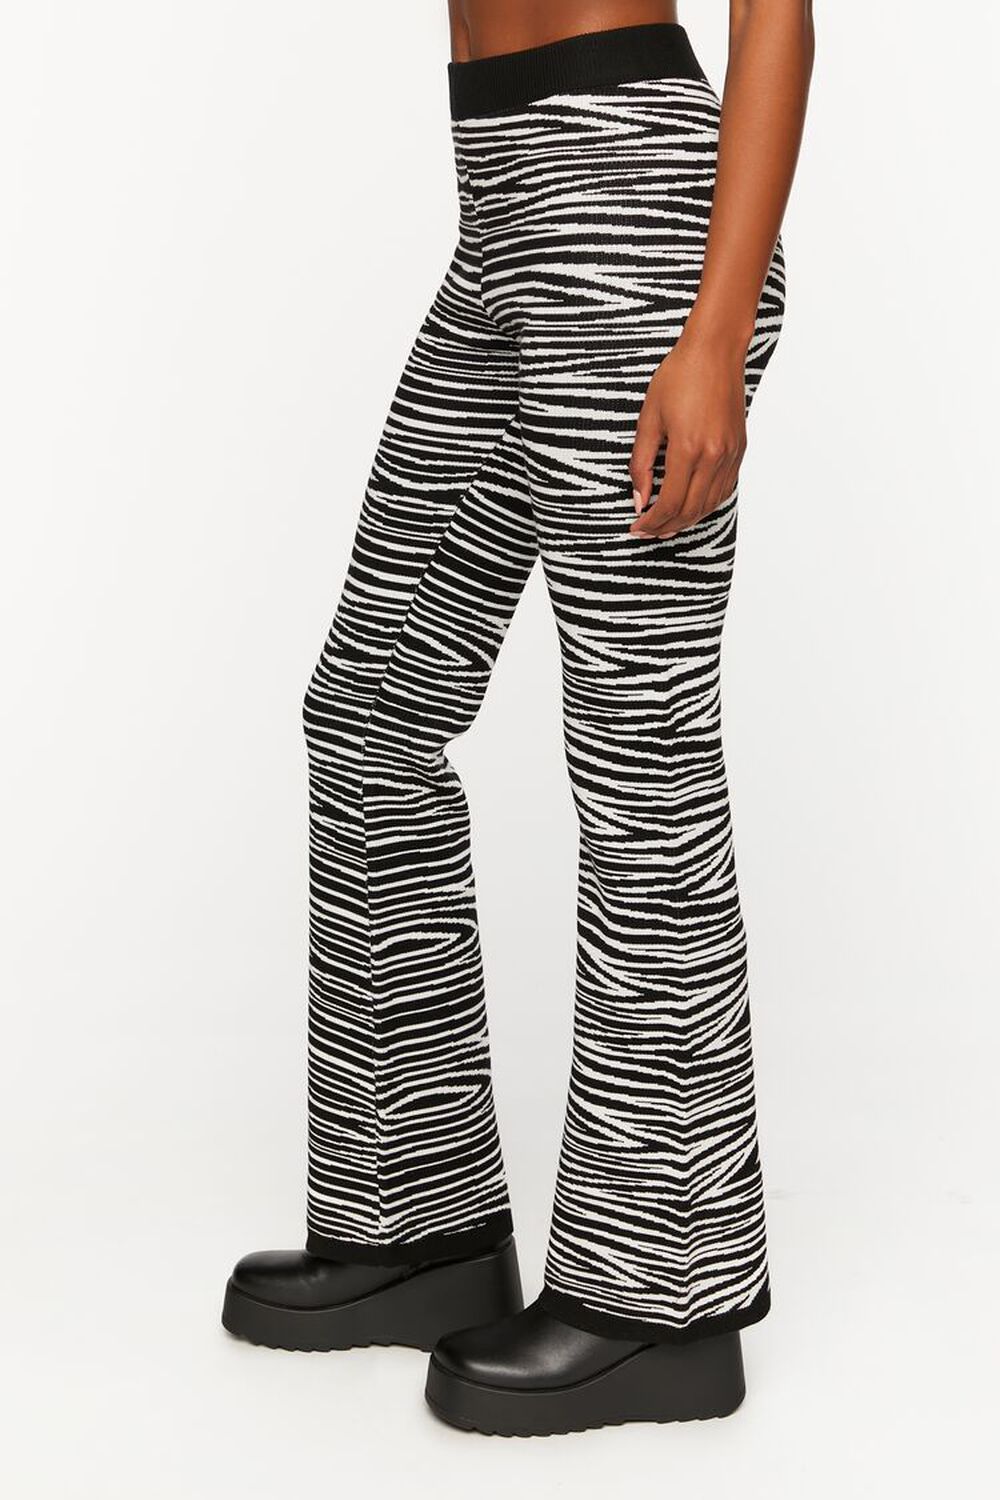 BLACK/WHITE Zebra Print Flare Pants, image 3